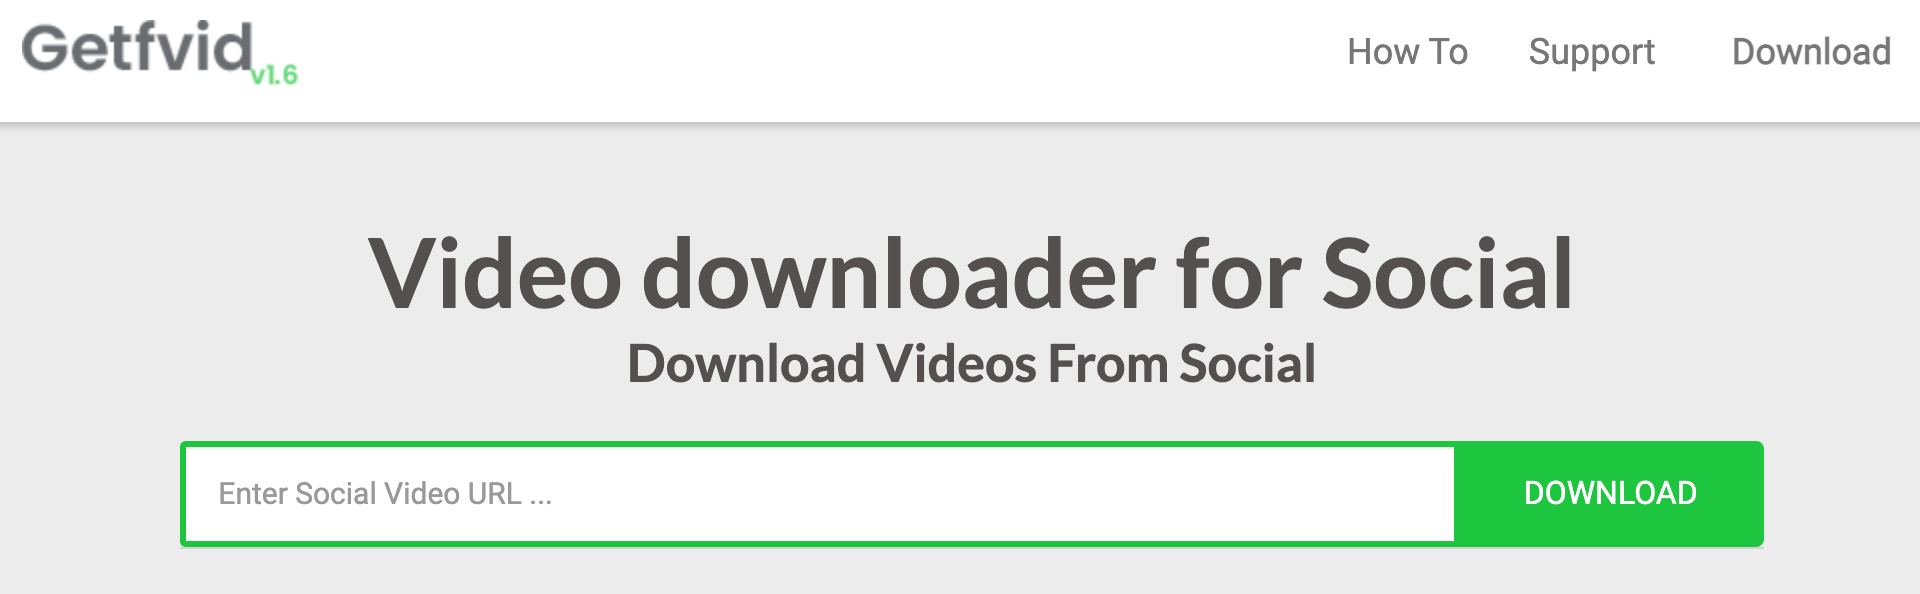 GetVid - video downloader